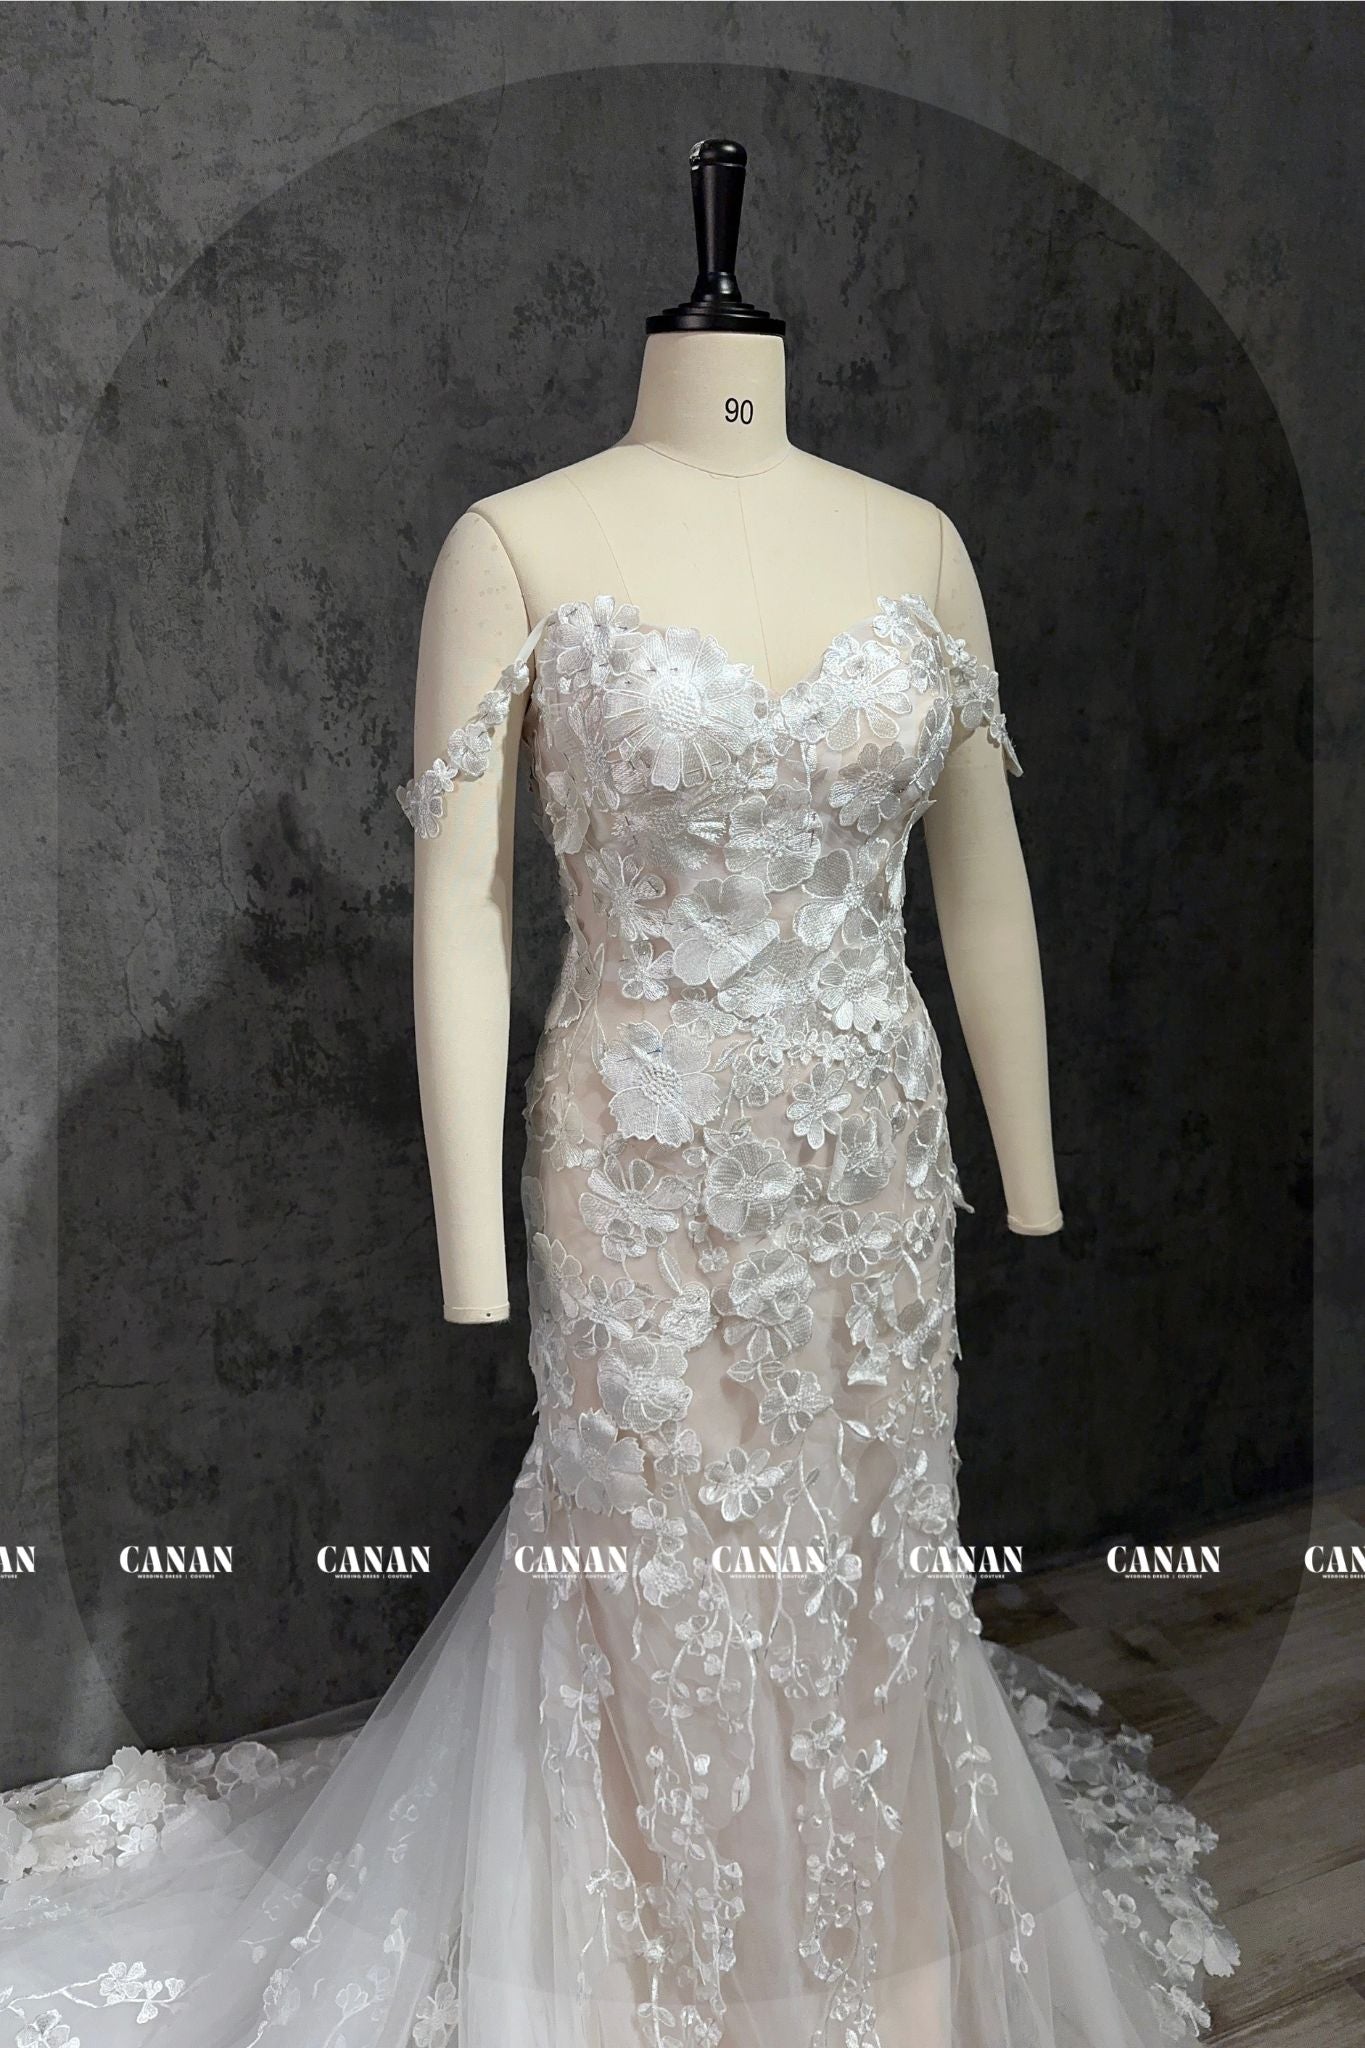 Donna - Romantic Mermaid Wedding Gown: 3D Floral Lace, Off-Shoulder Charm